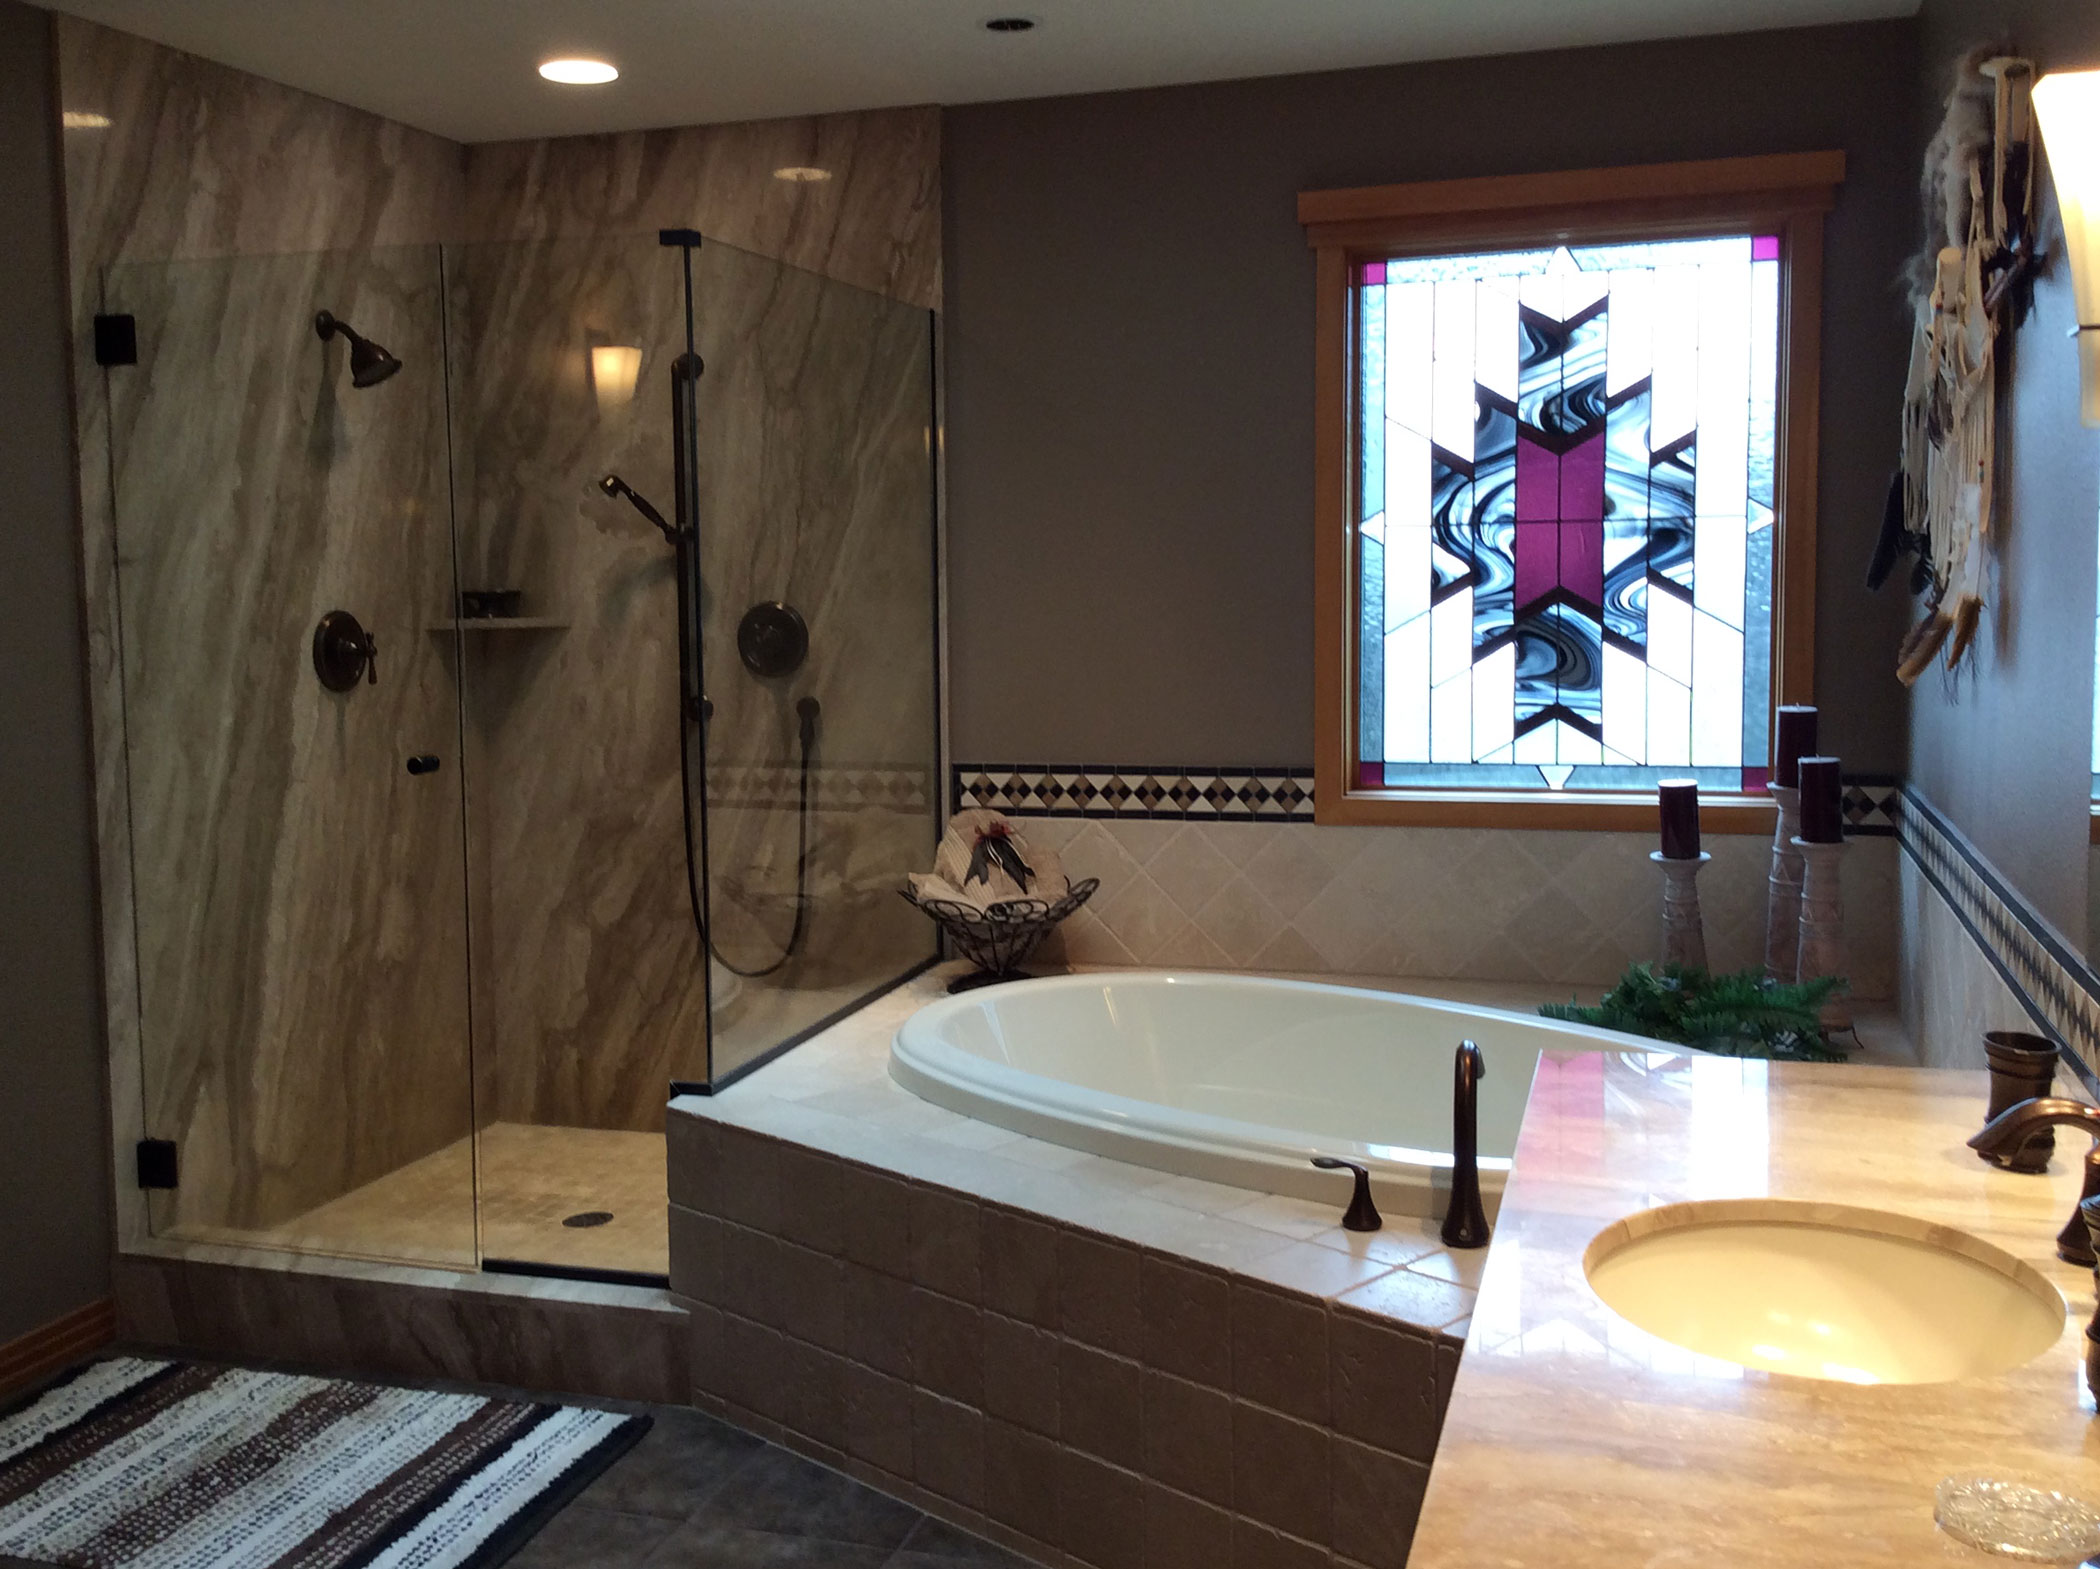 Bathroom Remodel - Window, tub, tile, floor, faucet hardware